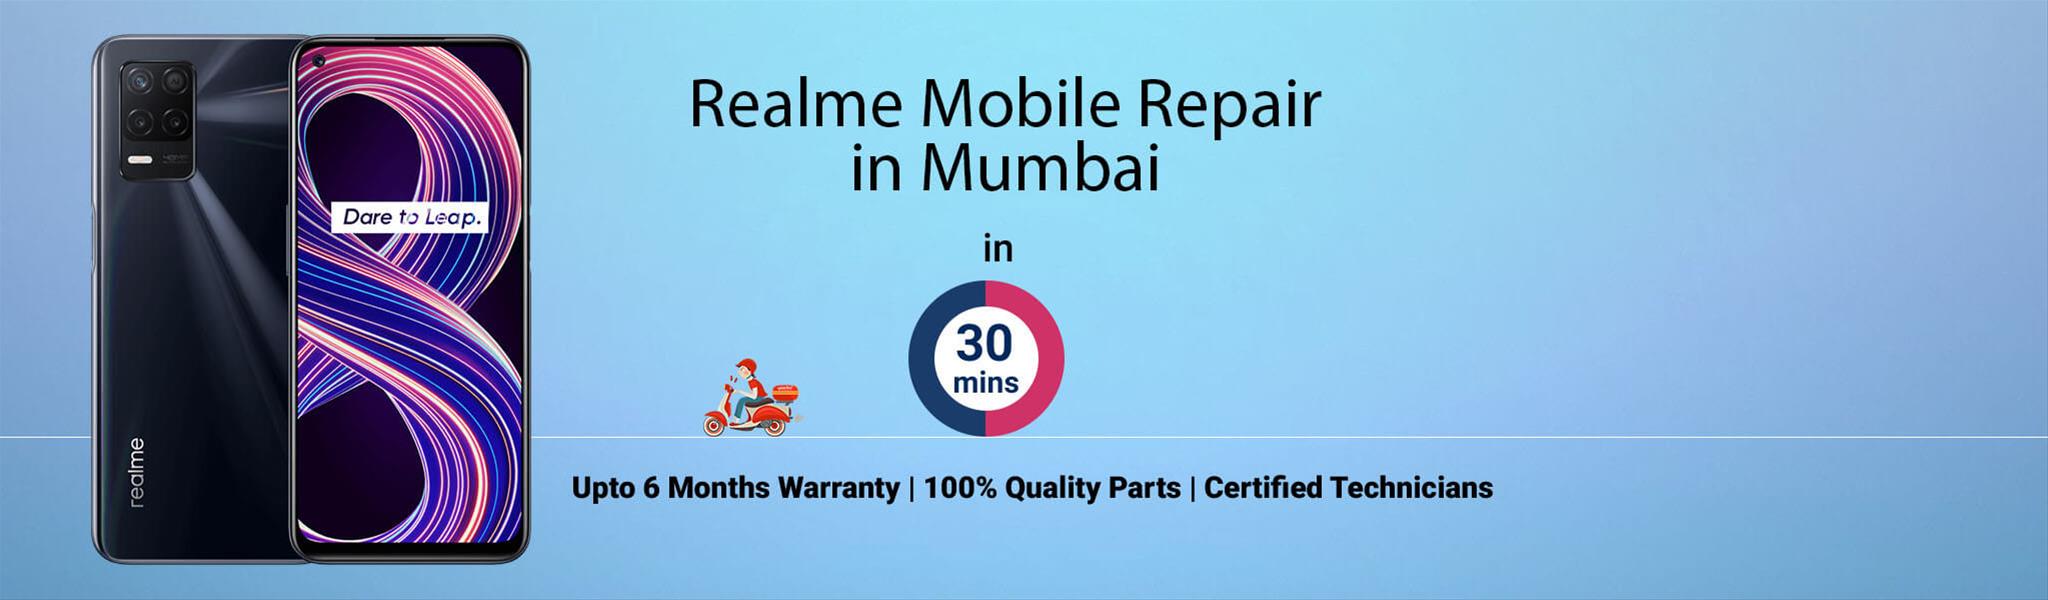 realeme-repair-service-banner-mumbai.jpg